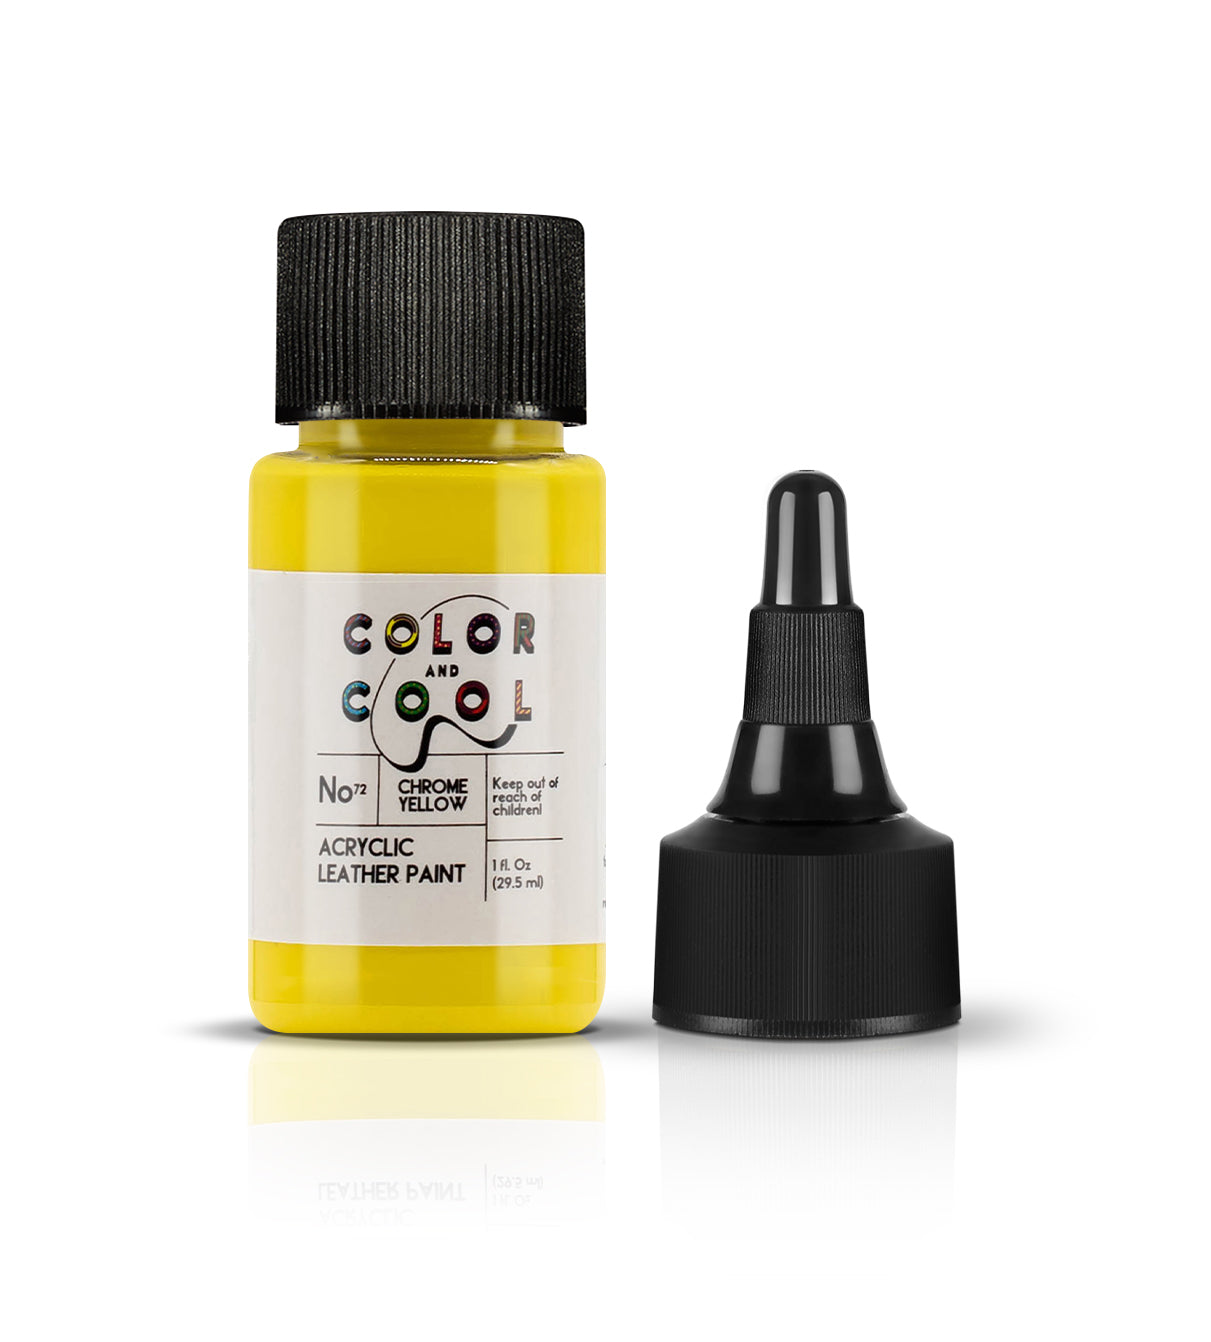 Acrylic Leather Paint Chrome Yellow - 1 oz (30 ml) – colorandcool